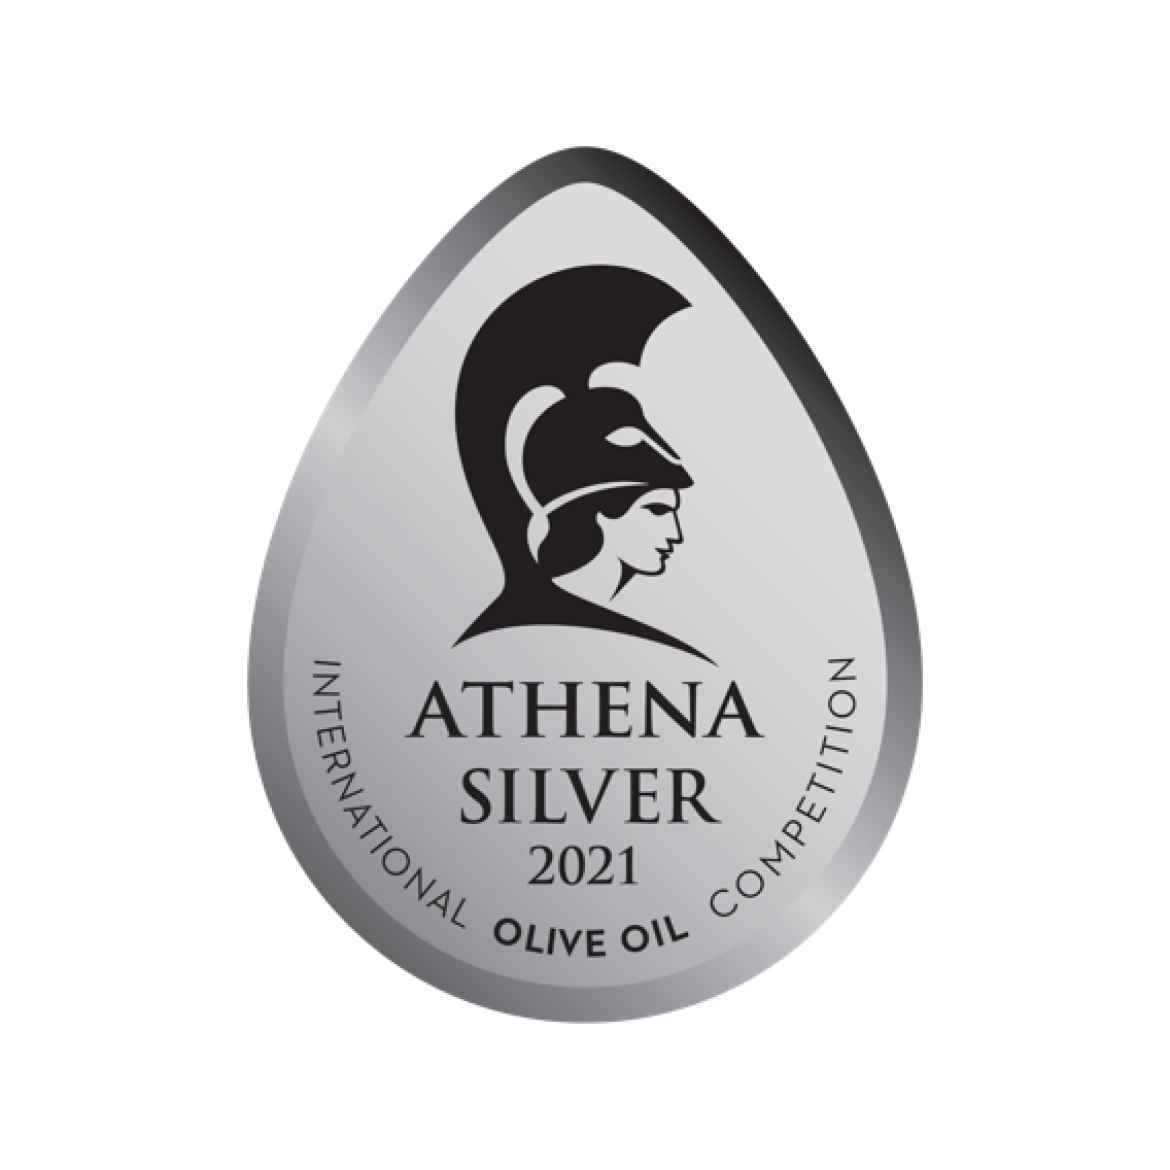 silver-athena-iooc-2021.png